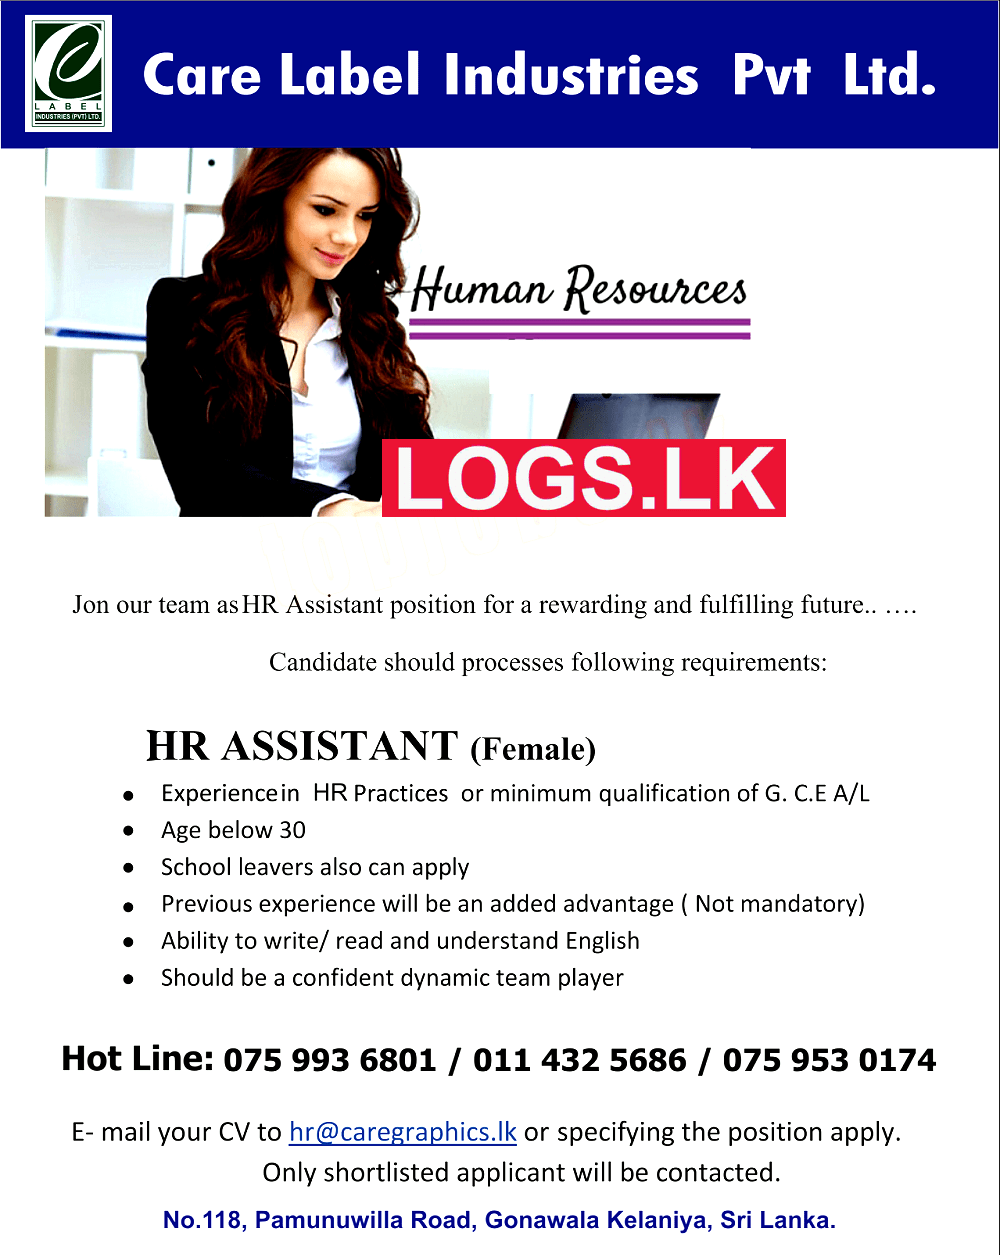 HR Assistant (Female) Vacancy at Care Label Industries (Pvt) Ltd Job Vacancies in Sri Lanka